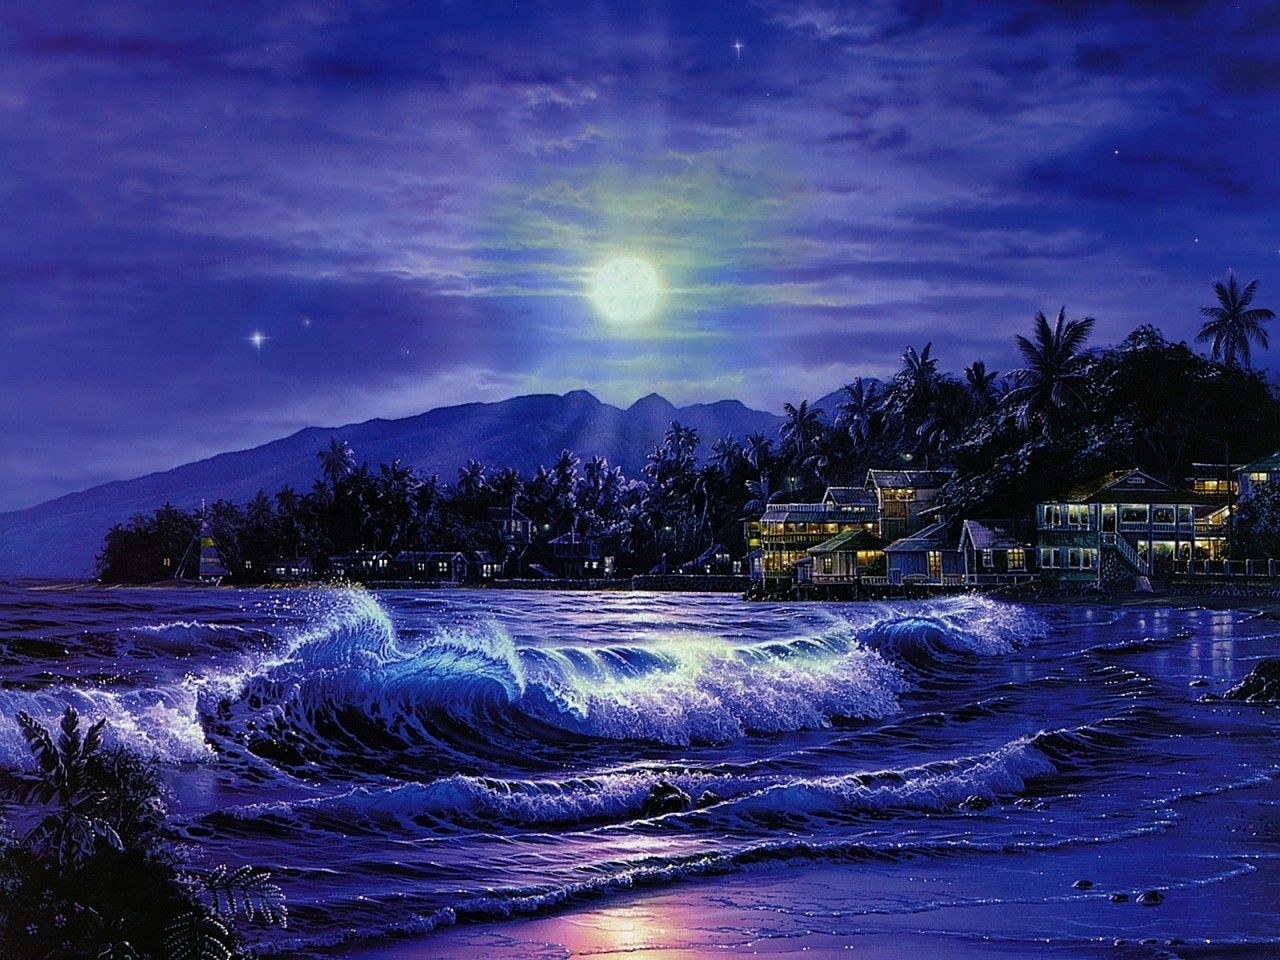 Ocean Waves at Night Wallpaper Free Ocean Waves at Night Background